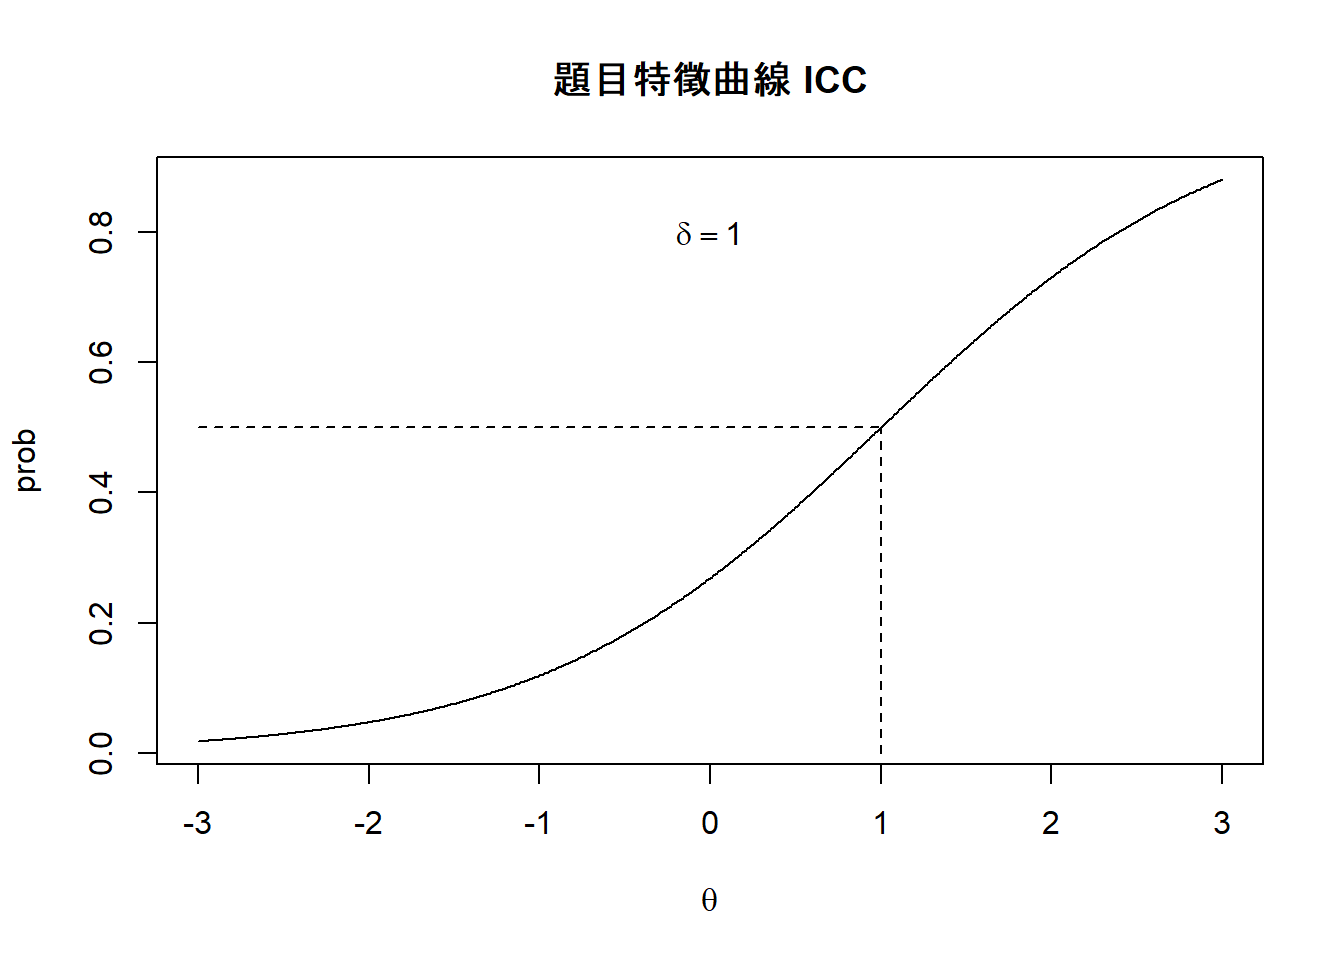 題目特徵曲線 ICC